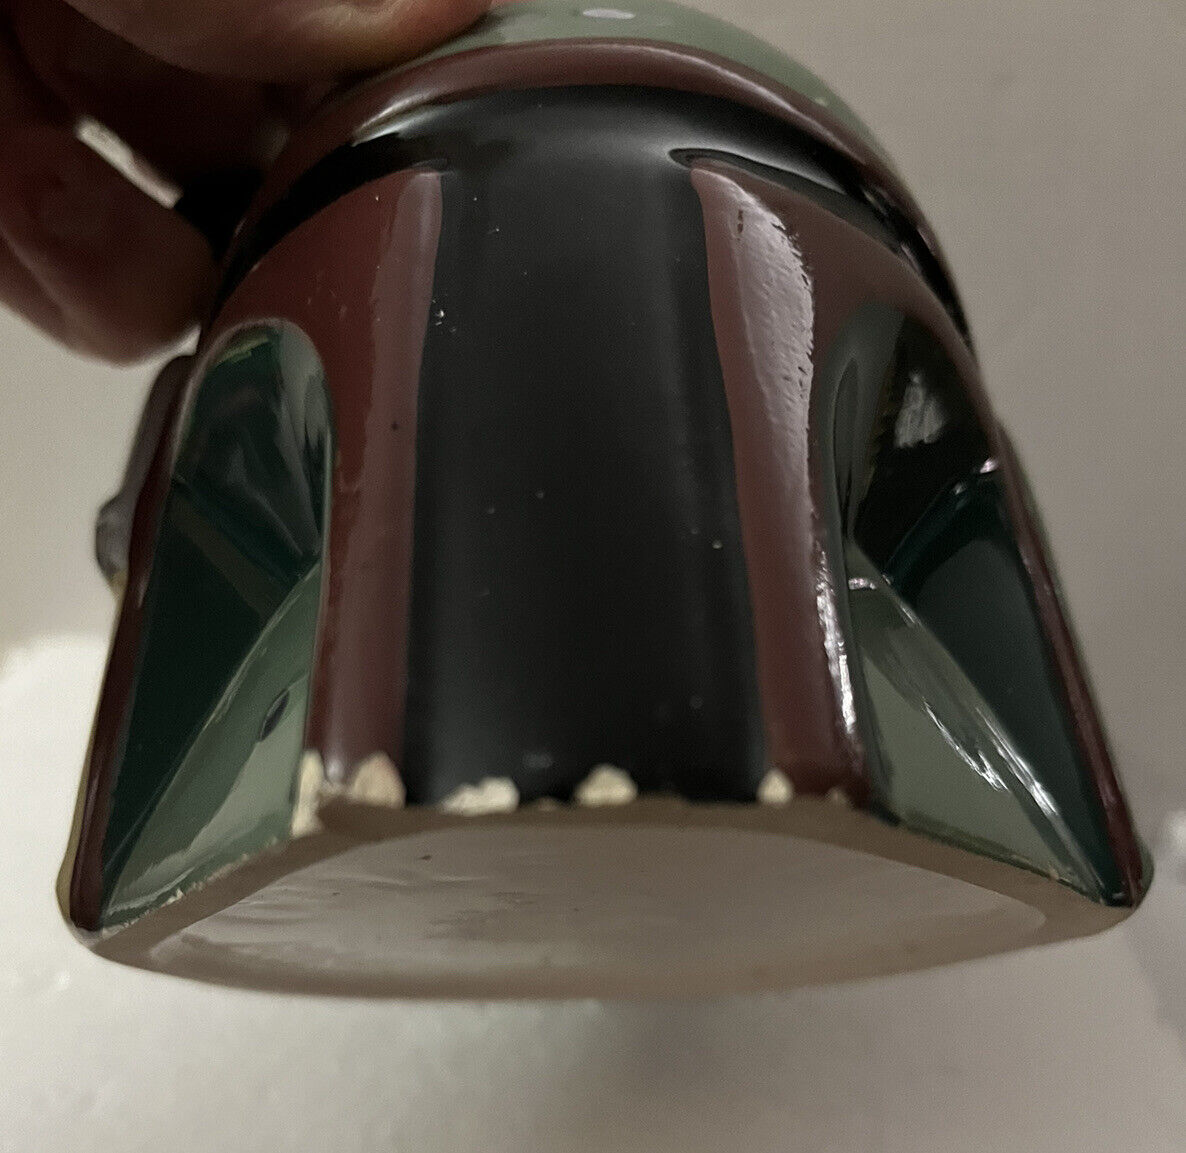 Star Wars Boba Fett Coffee Mug By Galerie. Retired 2010 mandalorian tea READ